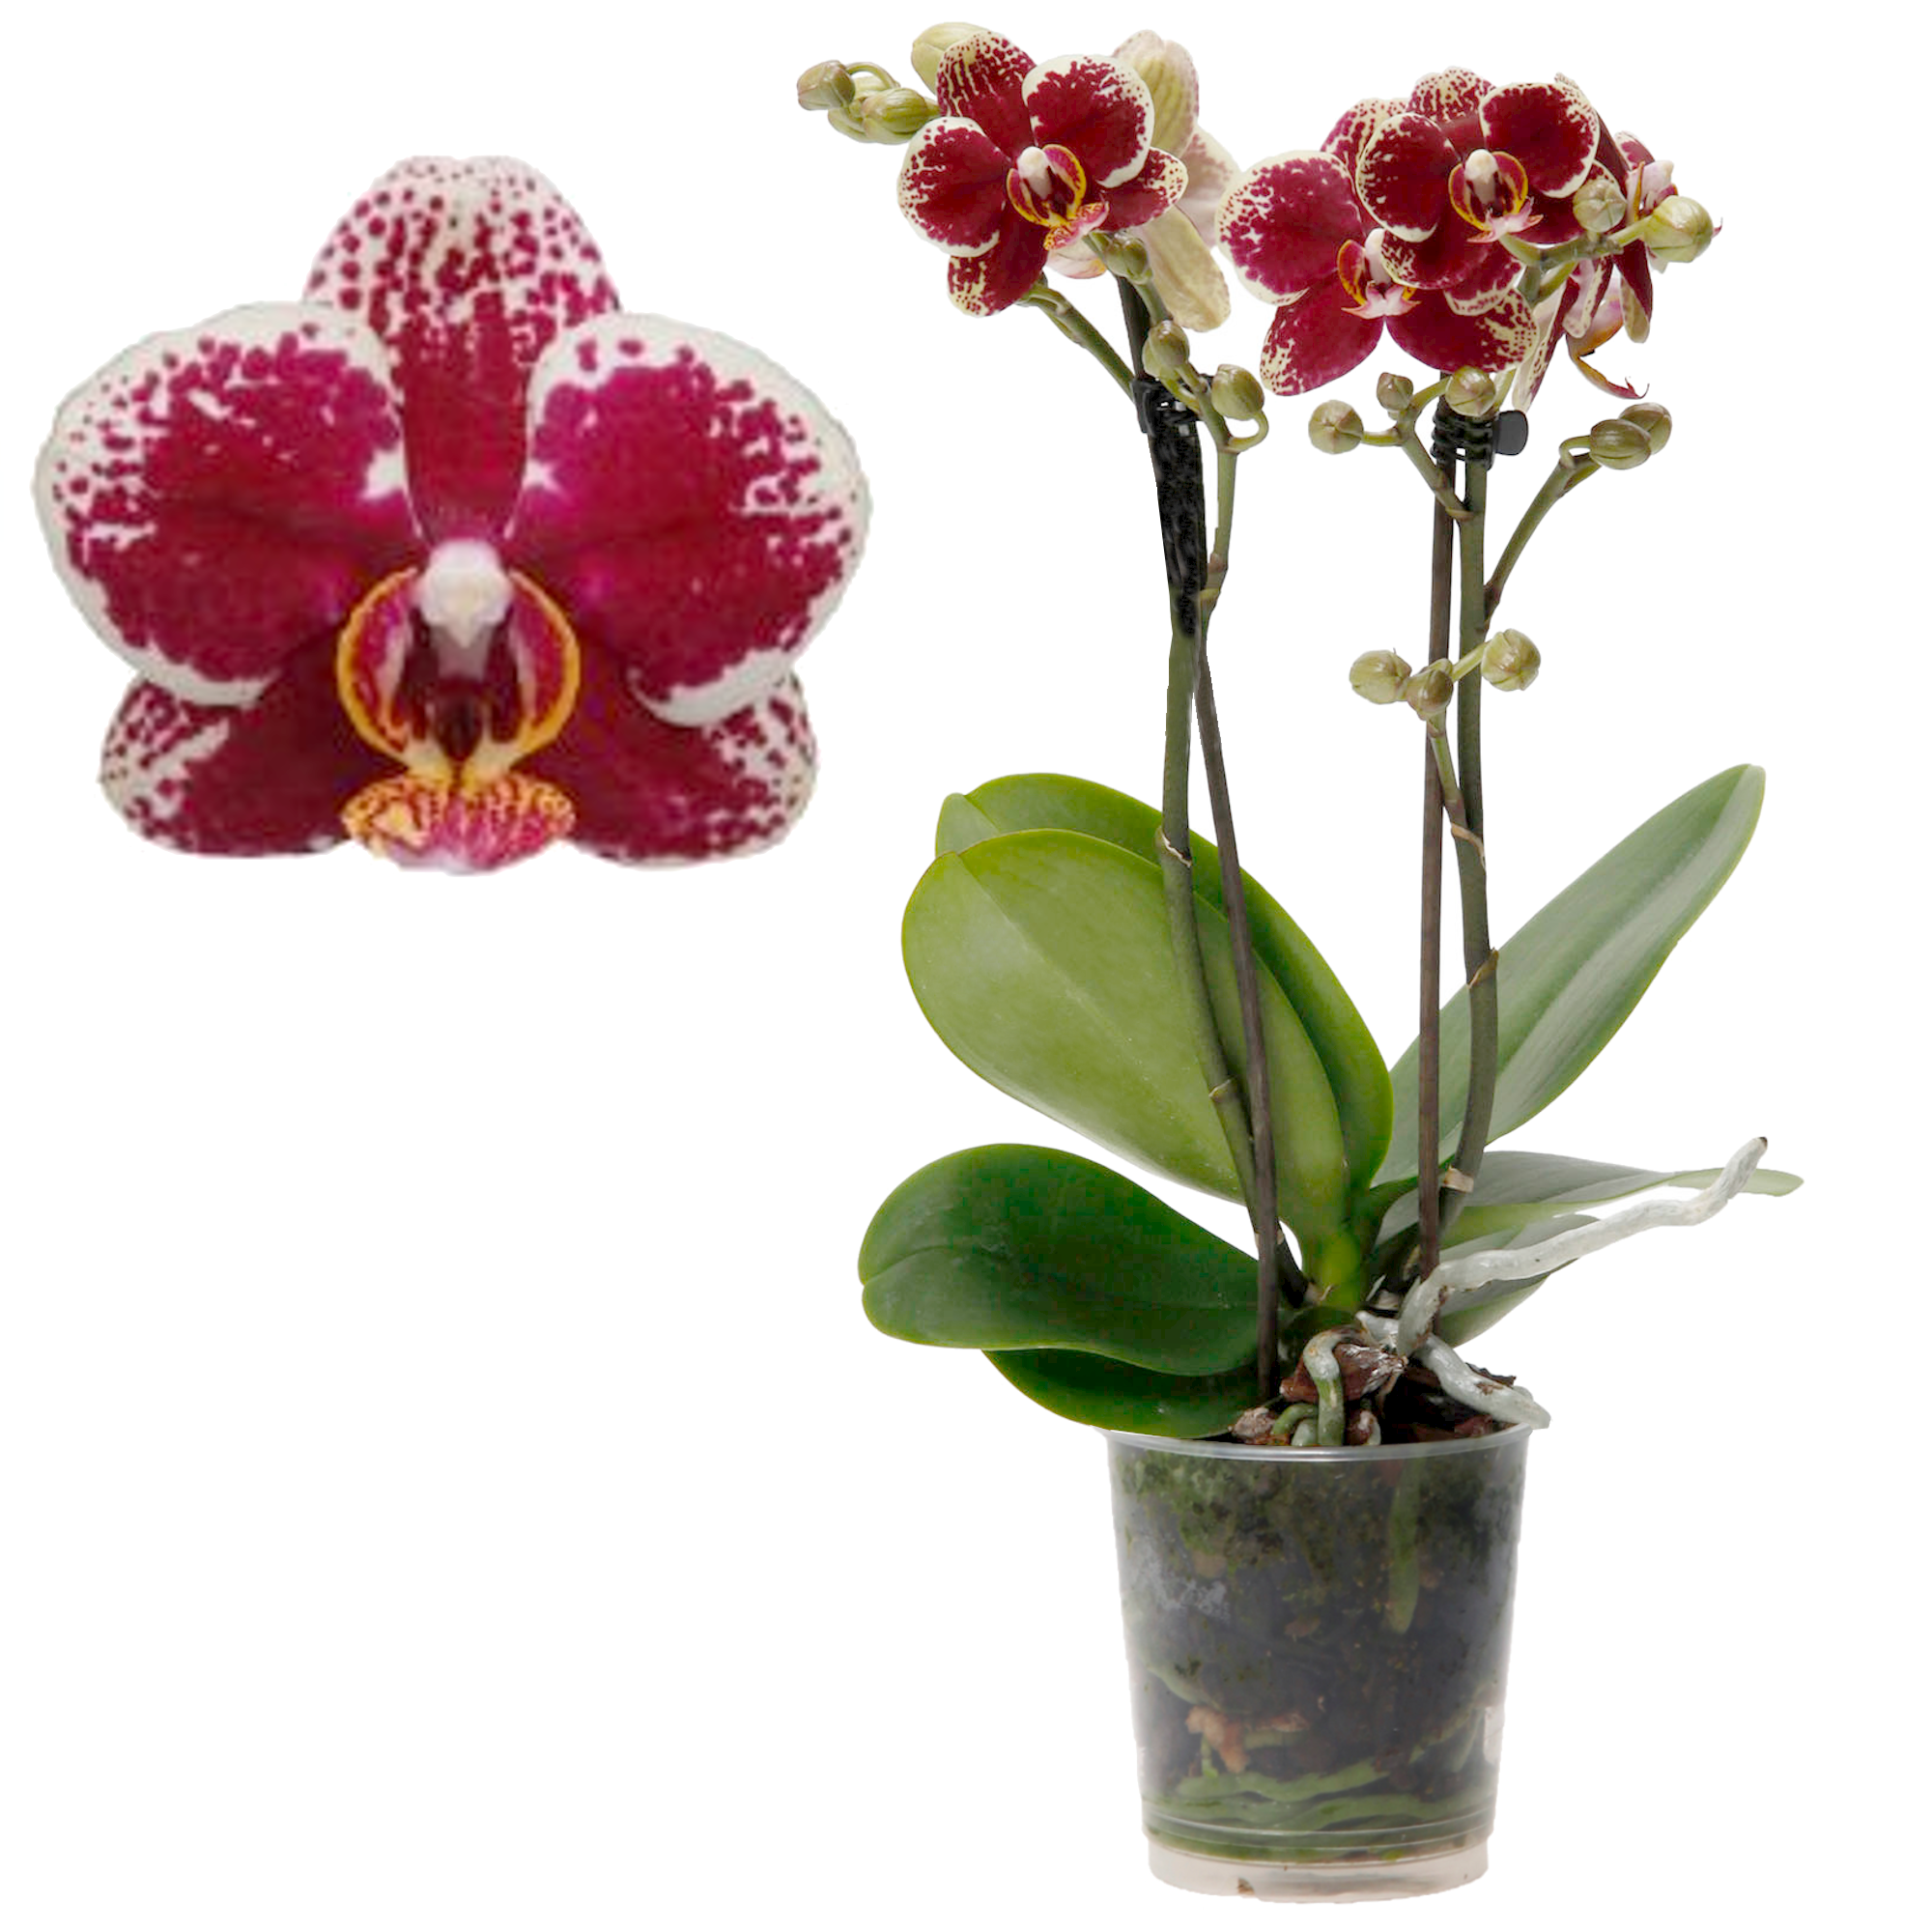 Schmetterlingsorchidee 'Spain' 1 Rispe rosa, 9 cm Topf + product picture